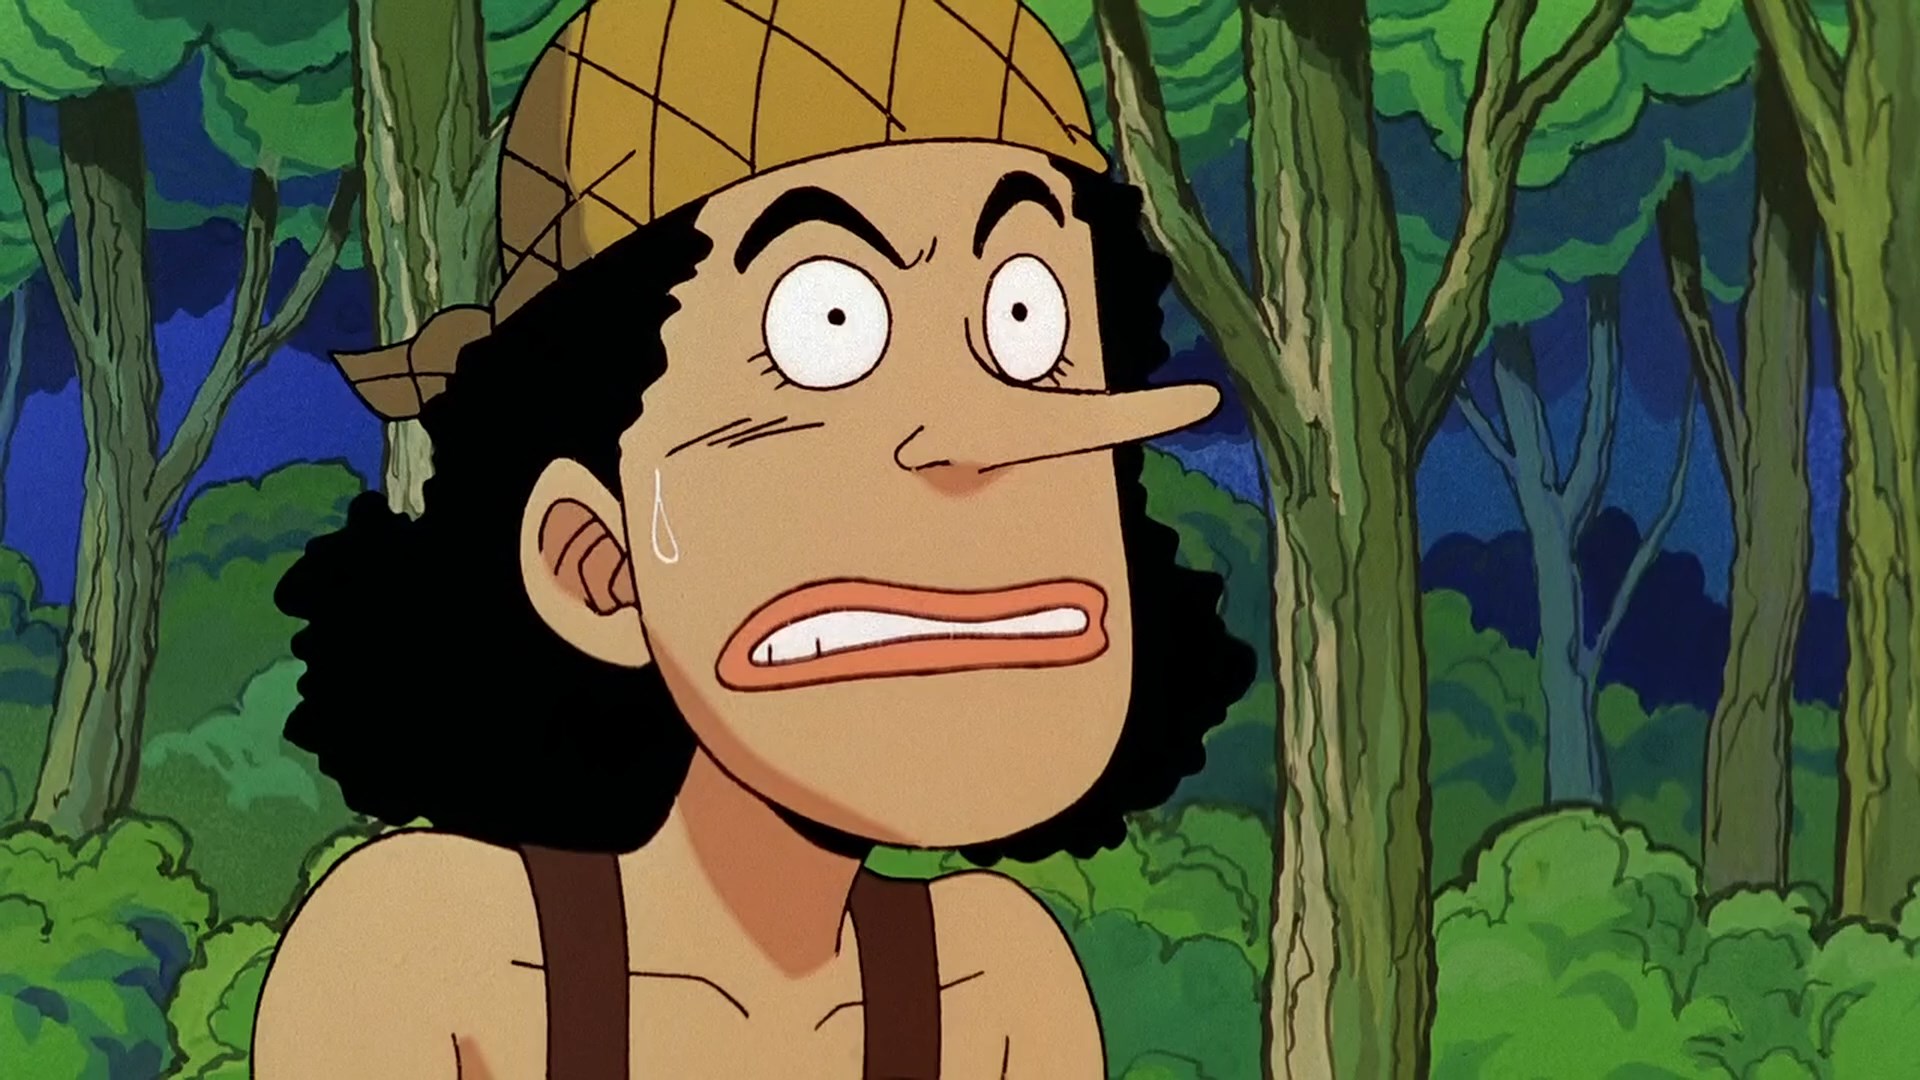 Naty in wonderland: One Piece Movie - O Grande Pirata do Ouro